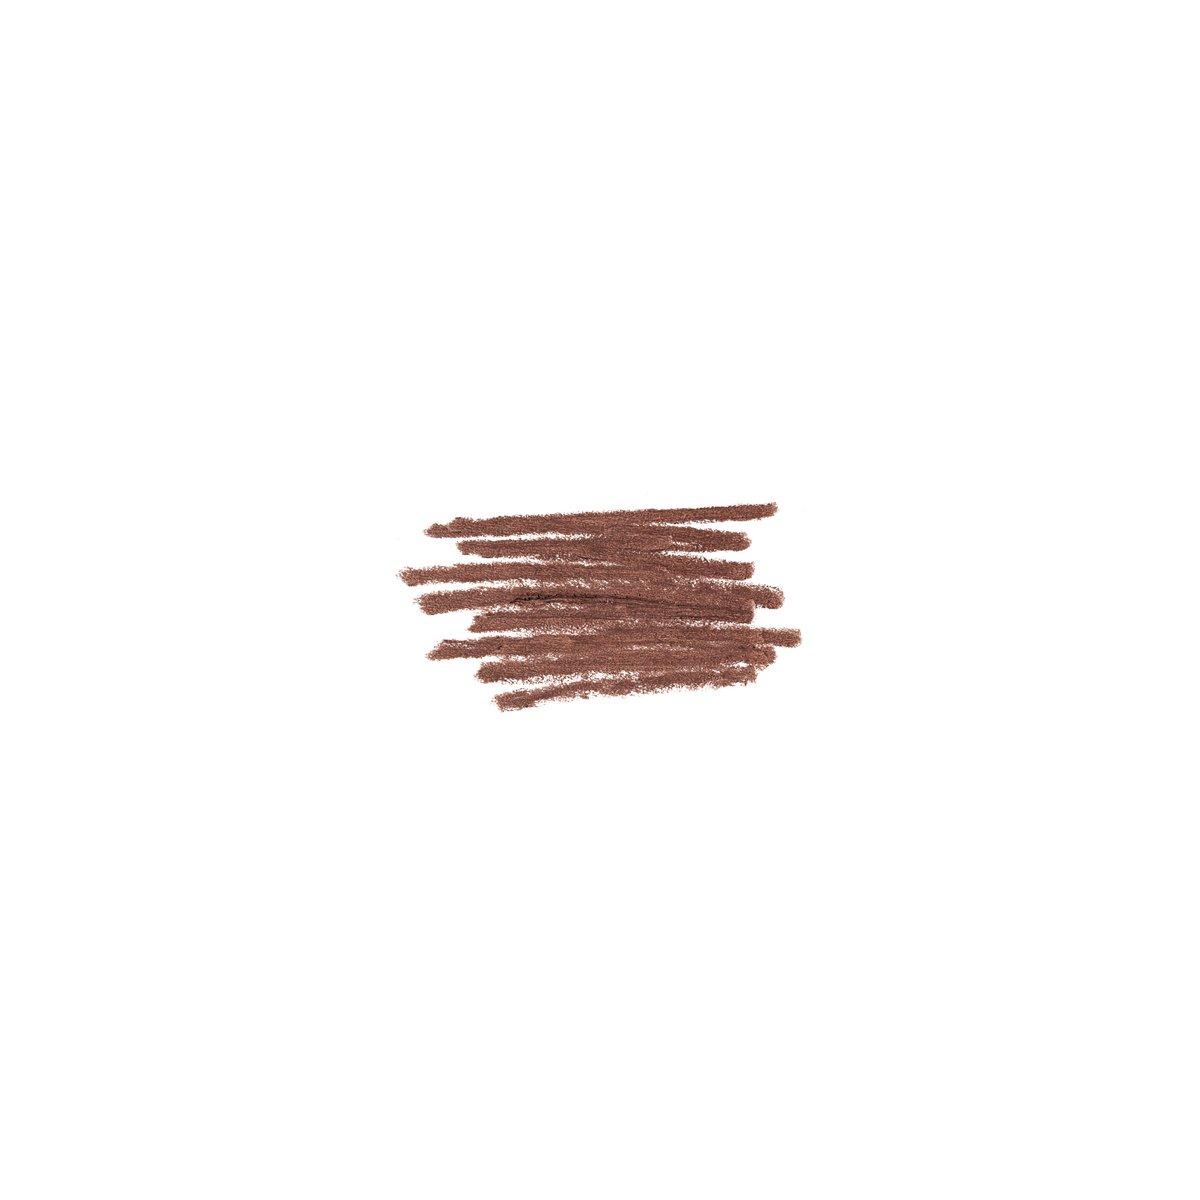 Flormar Ultra Thin Brow Pencil - 03 Brown 1pc